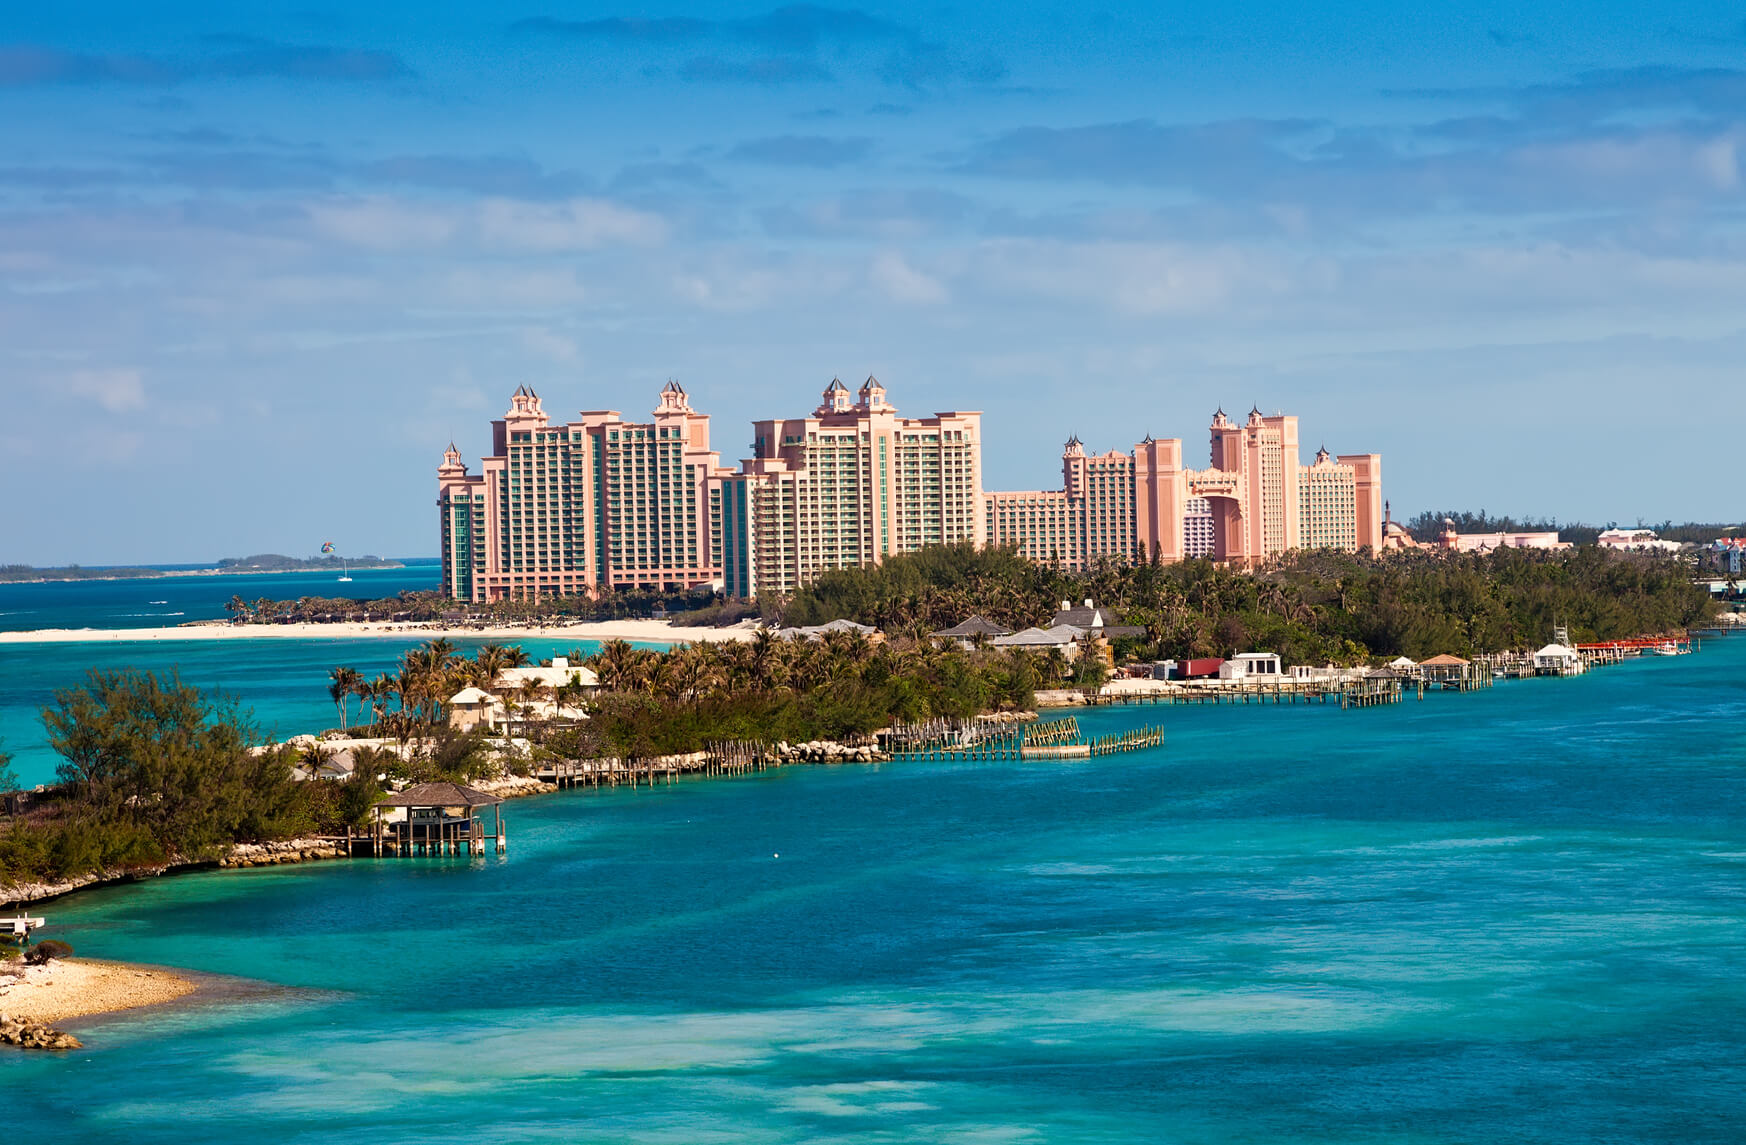 Flight deals from Miami or Orlando to the Bahamas | Secret Flying